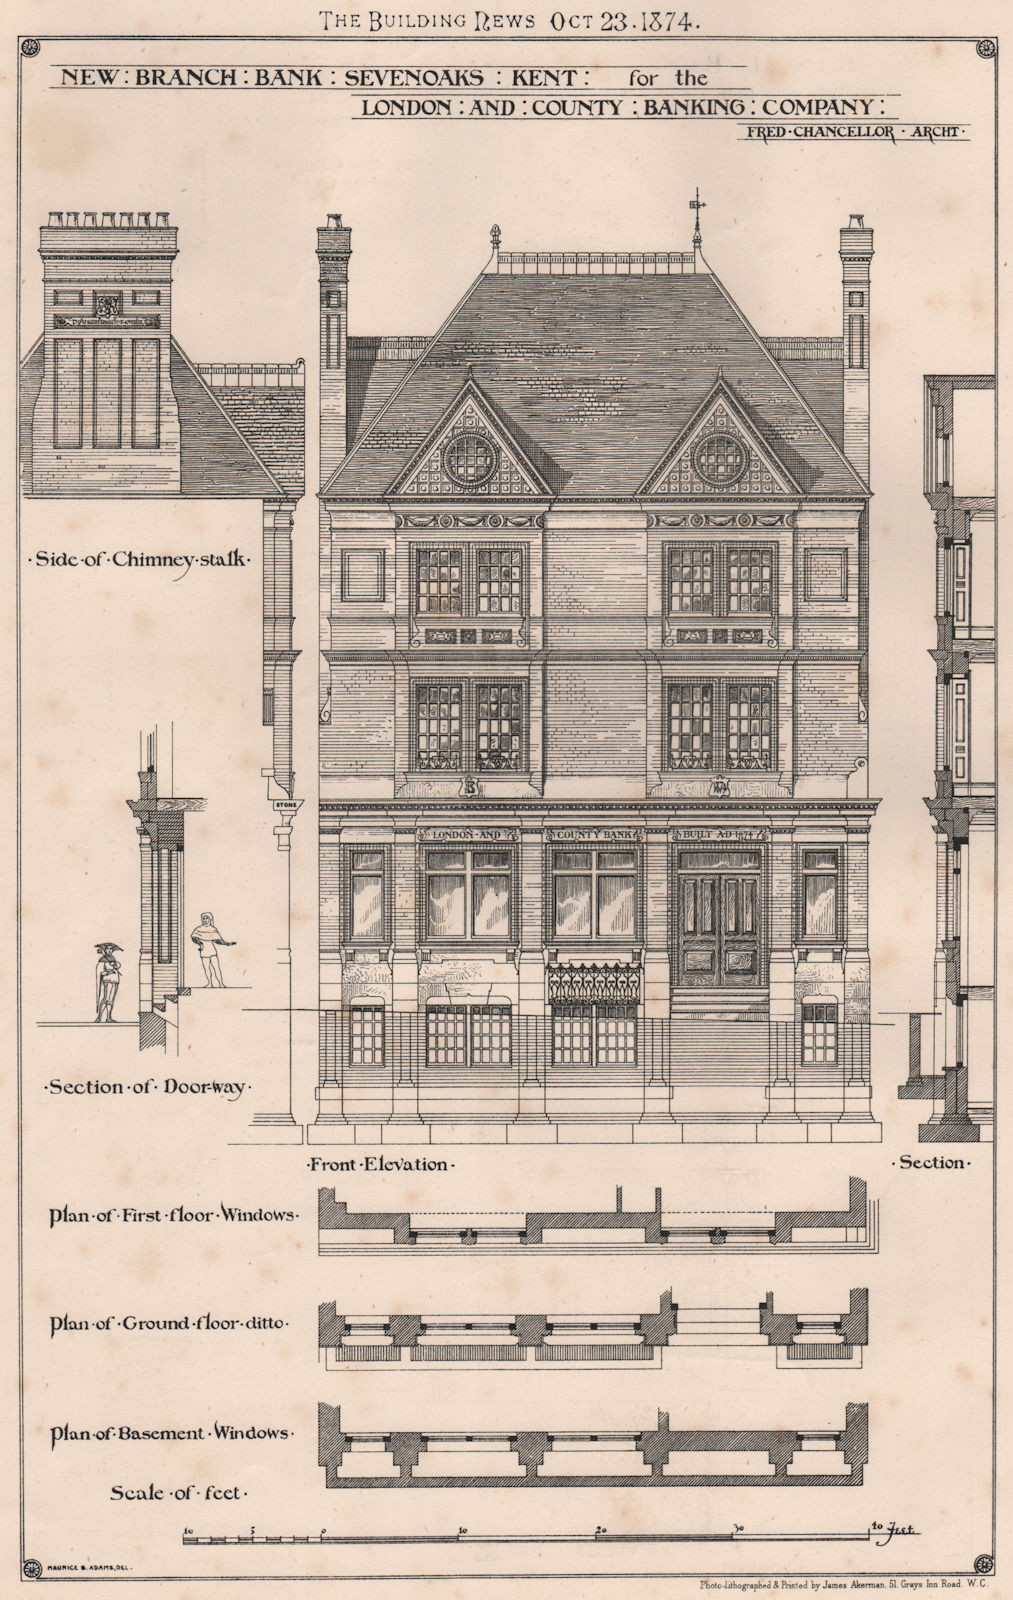 London & County Banking Company branch, Sevenoaks, Kent; Fred. Chancellor 1874